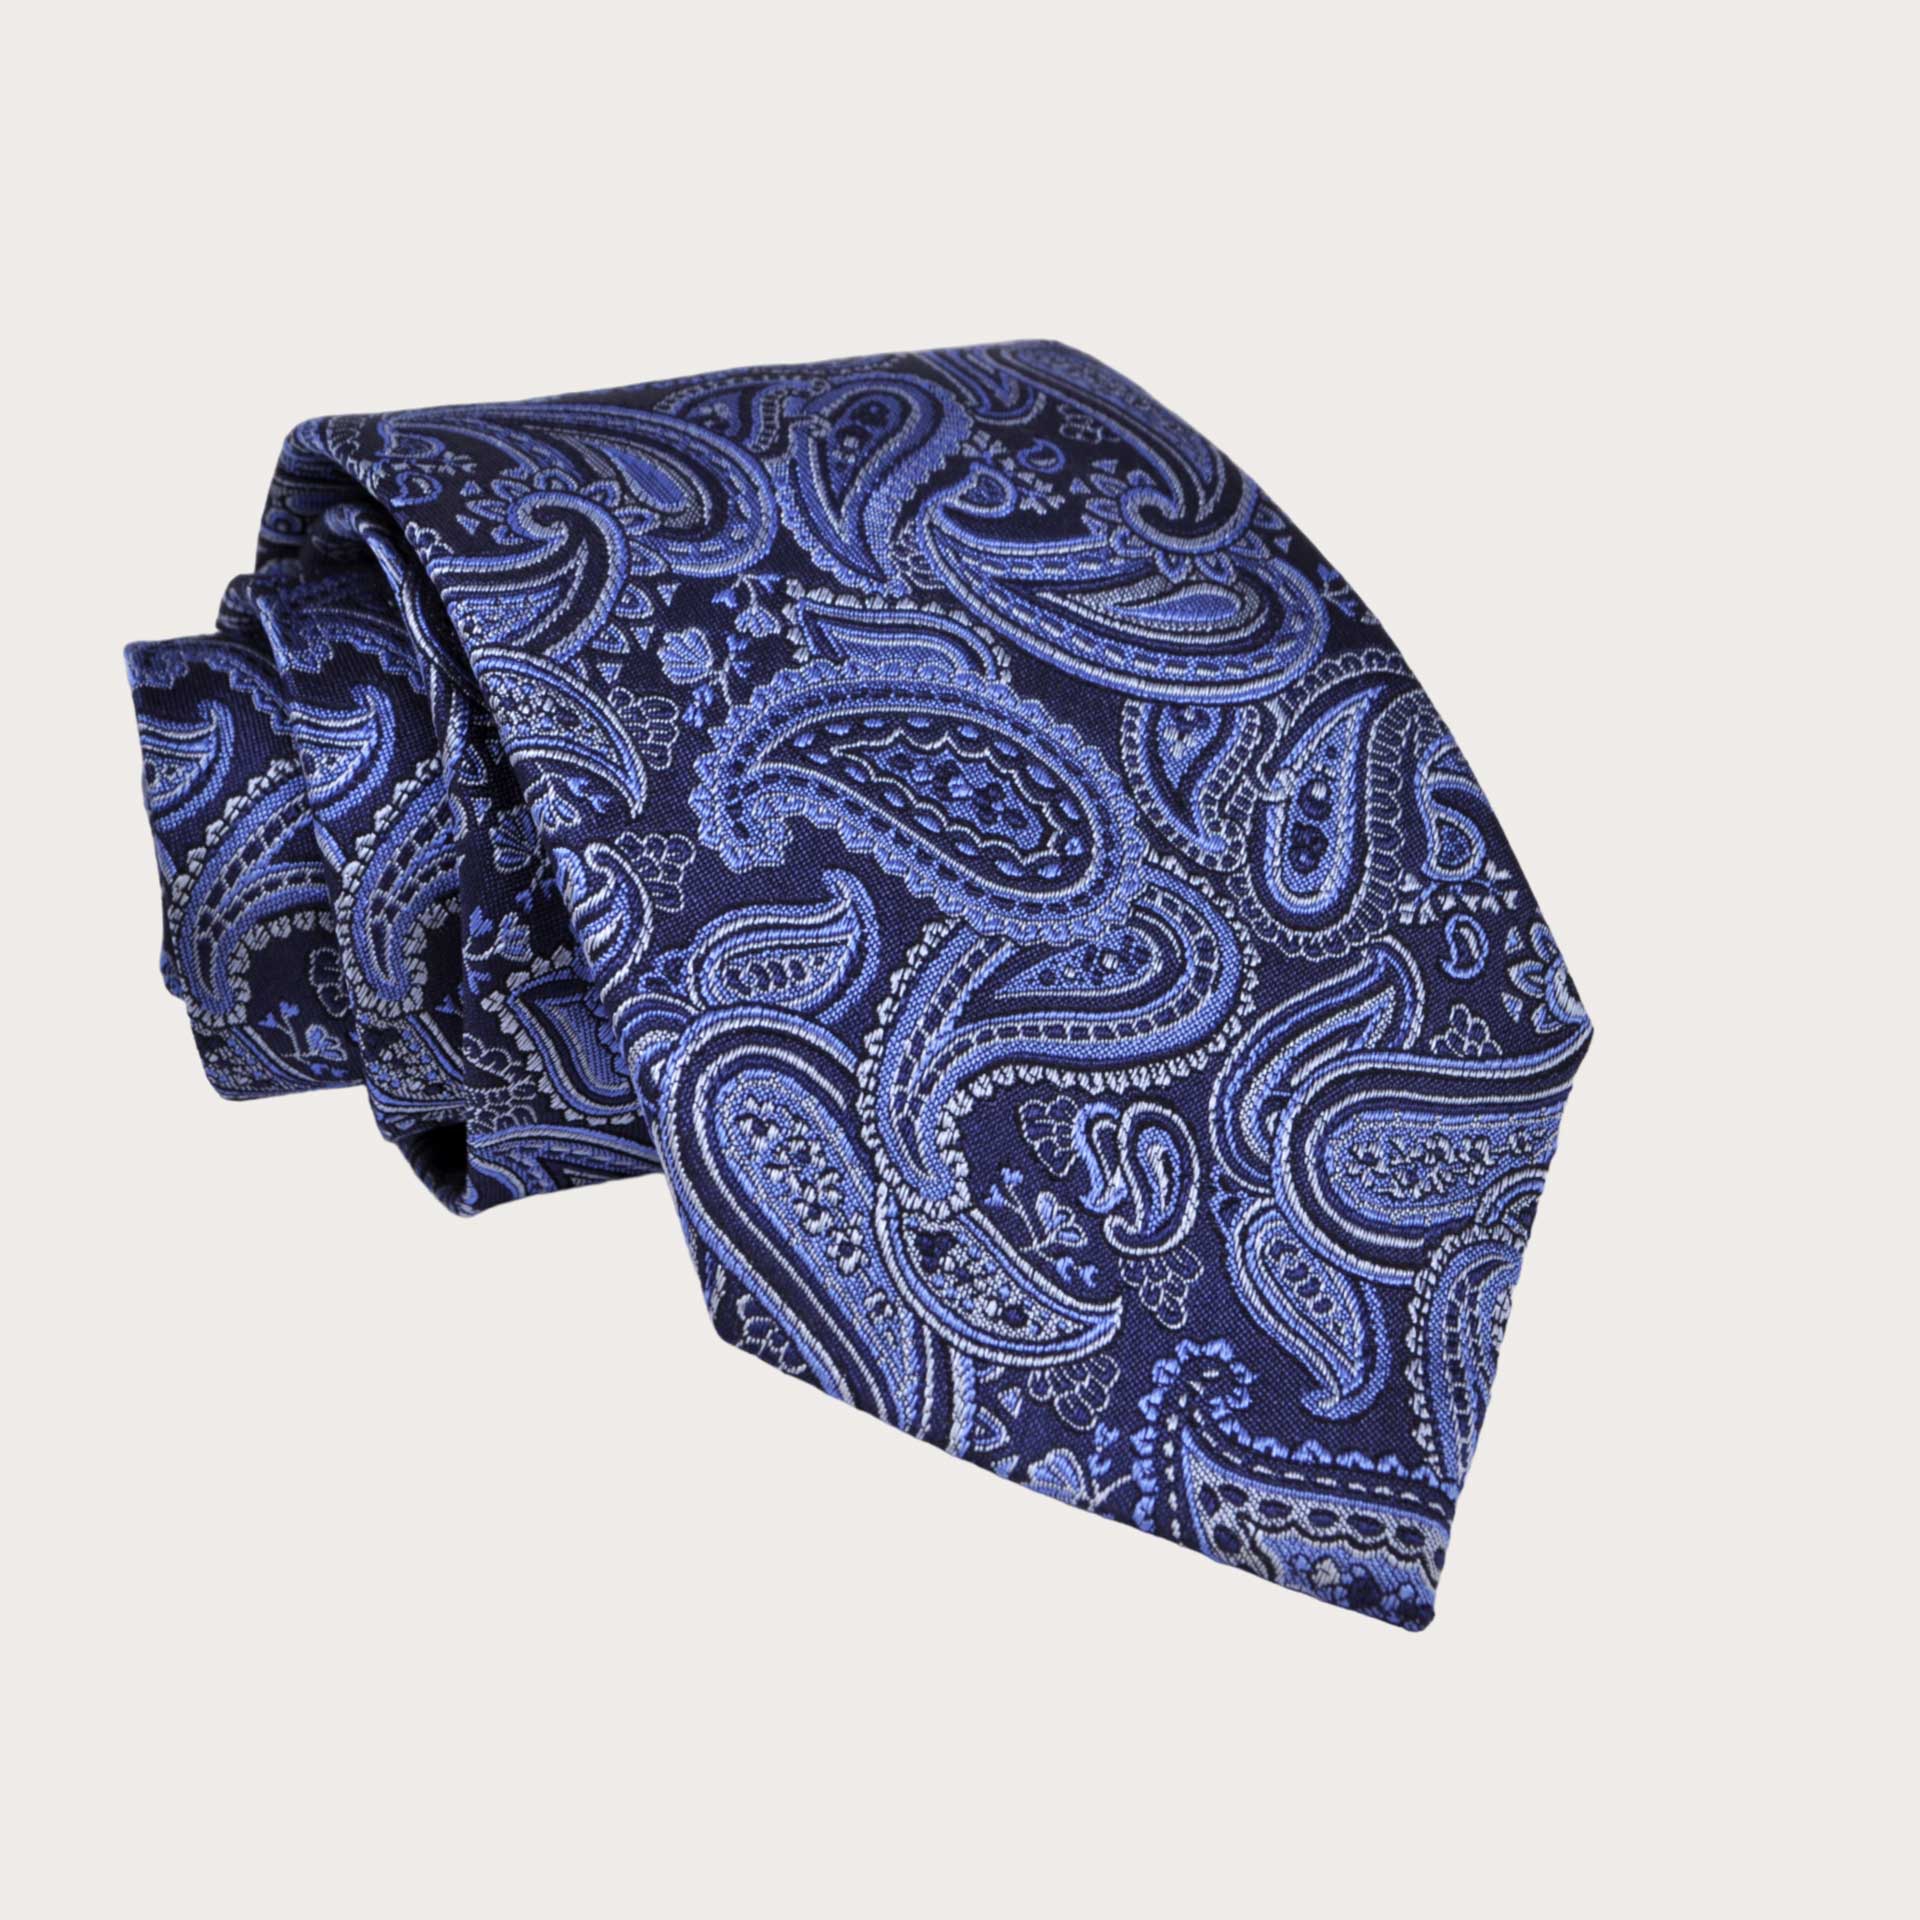 BRUCLE Men's blue paisley tie in jacquard silk